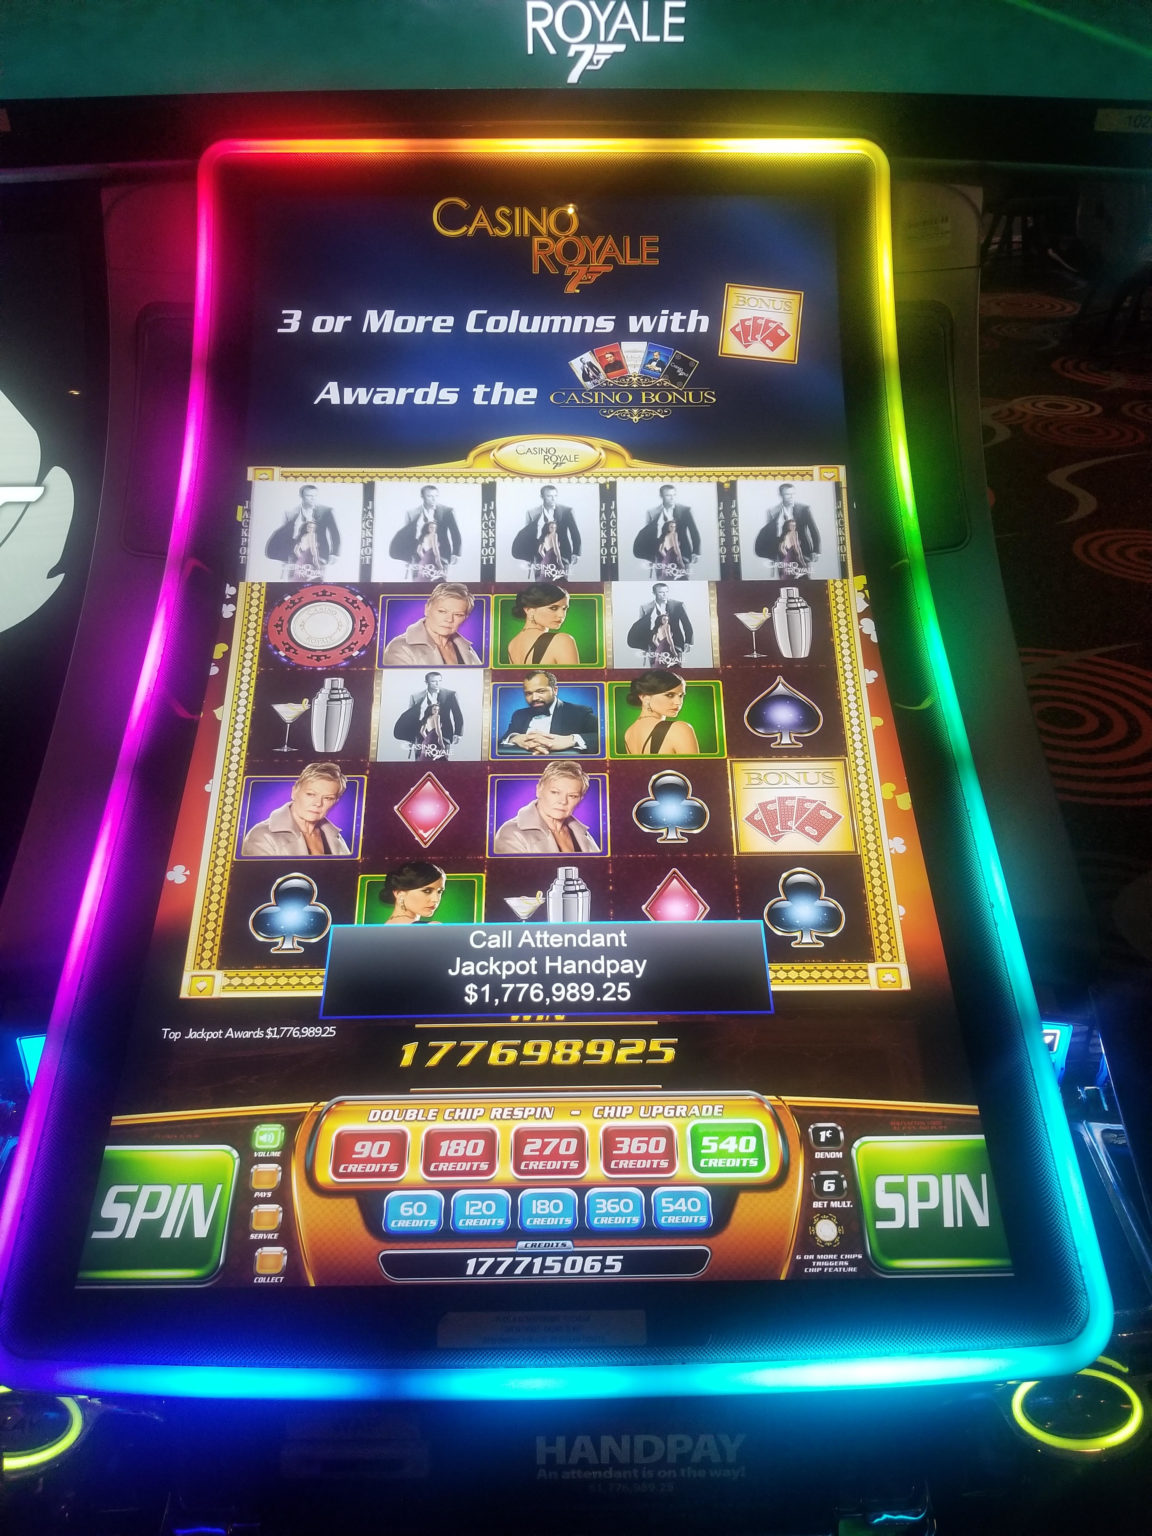 casino royal club instant play